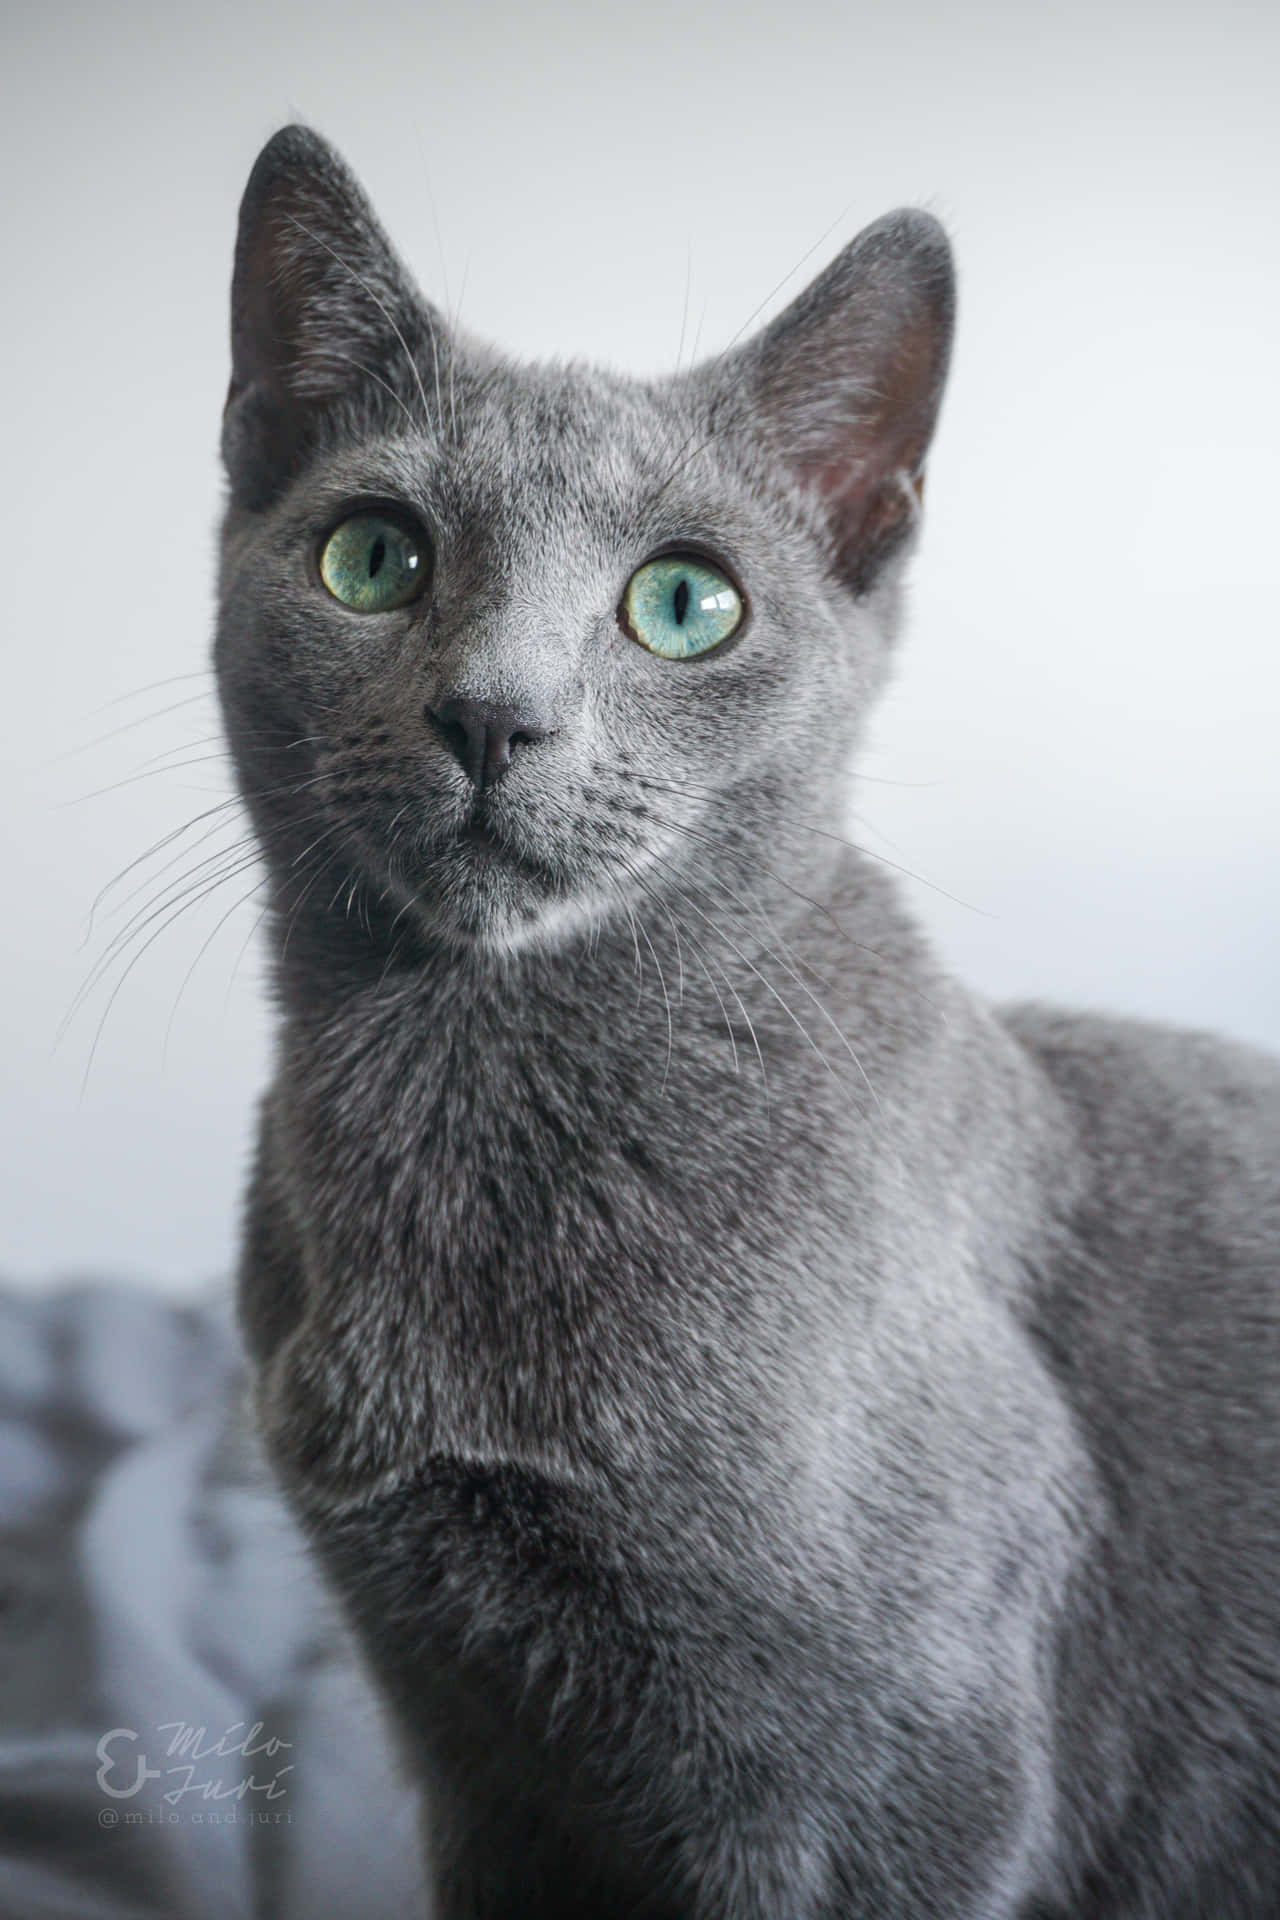 "Cuteness Overload! Adorable Russian Blue Cat"